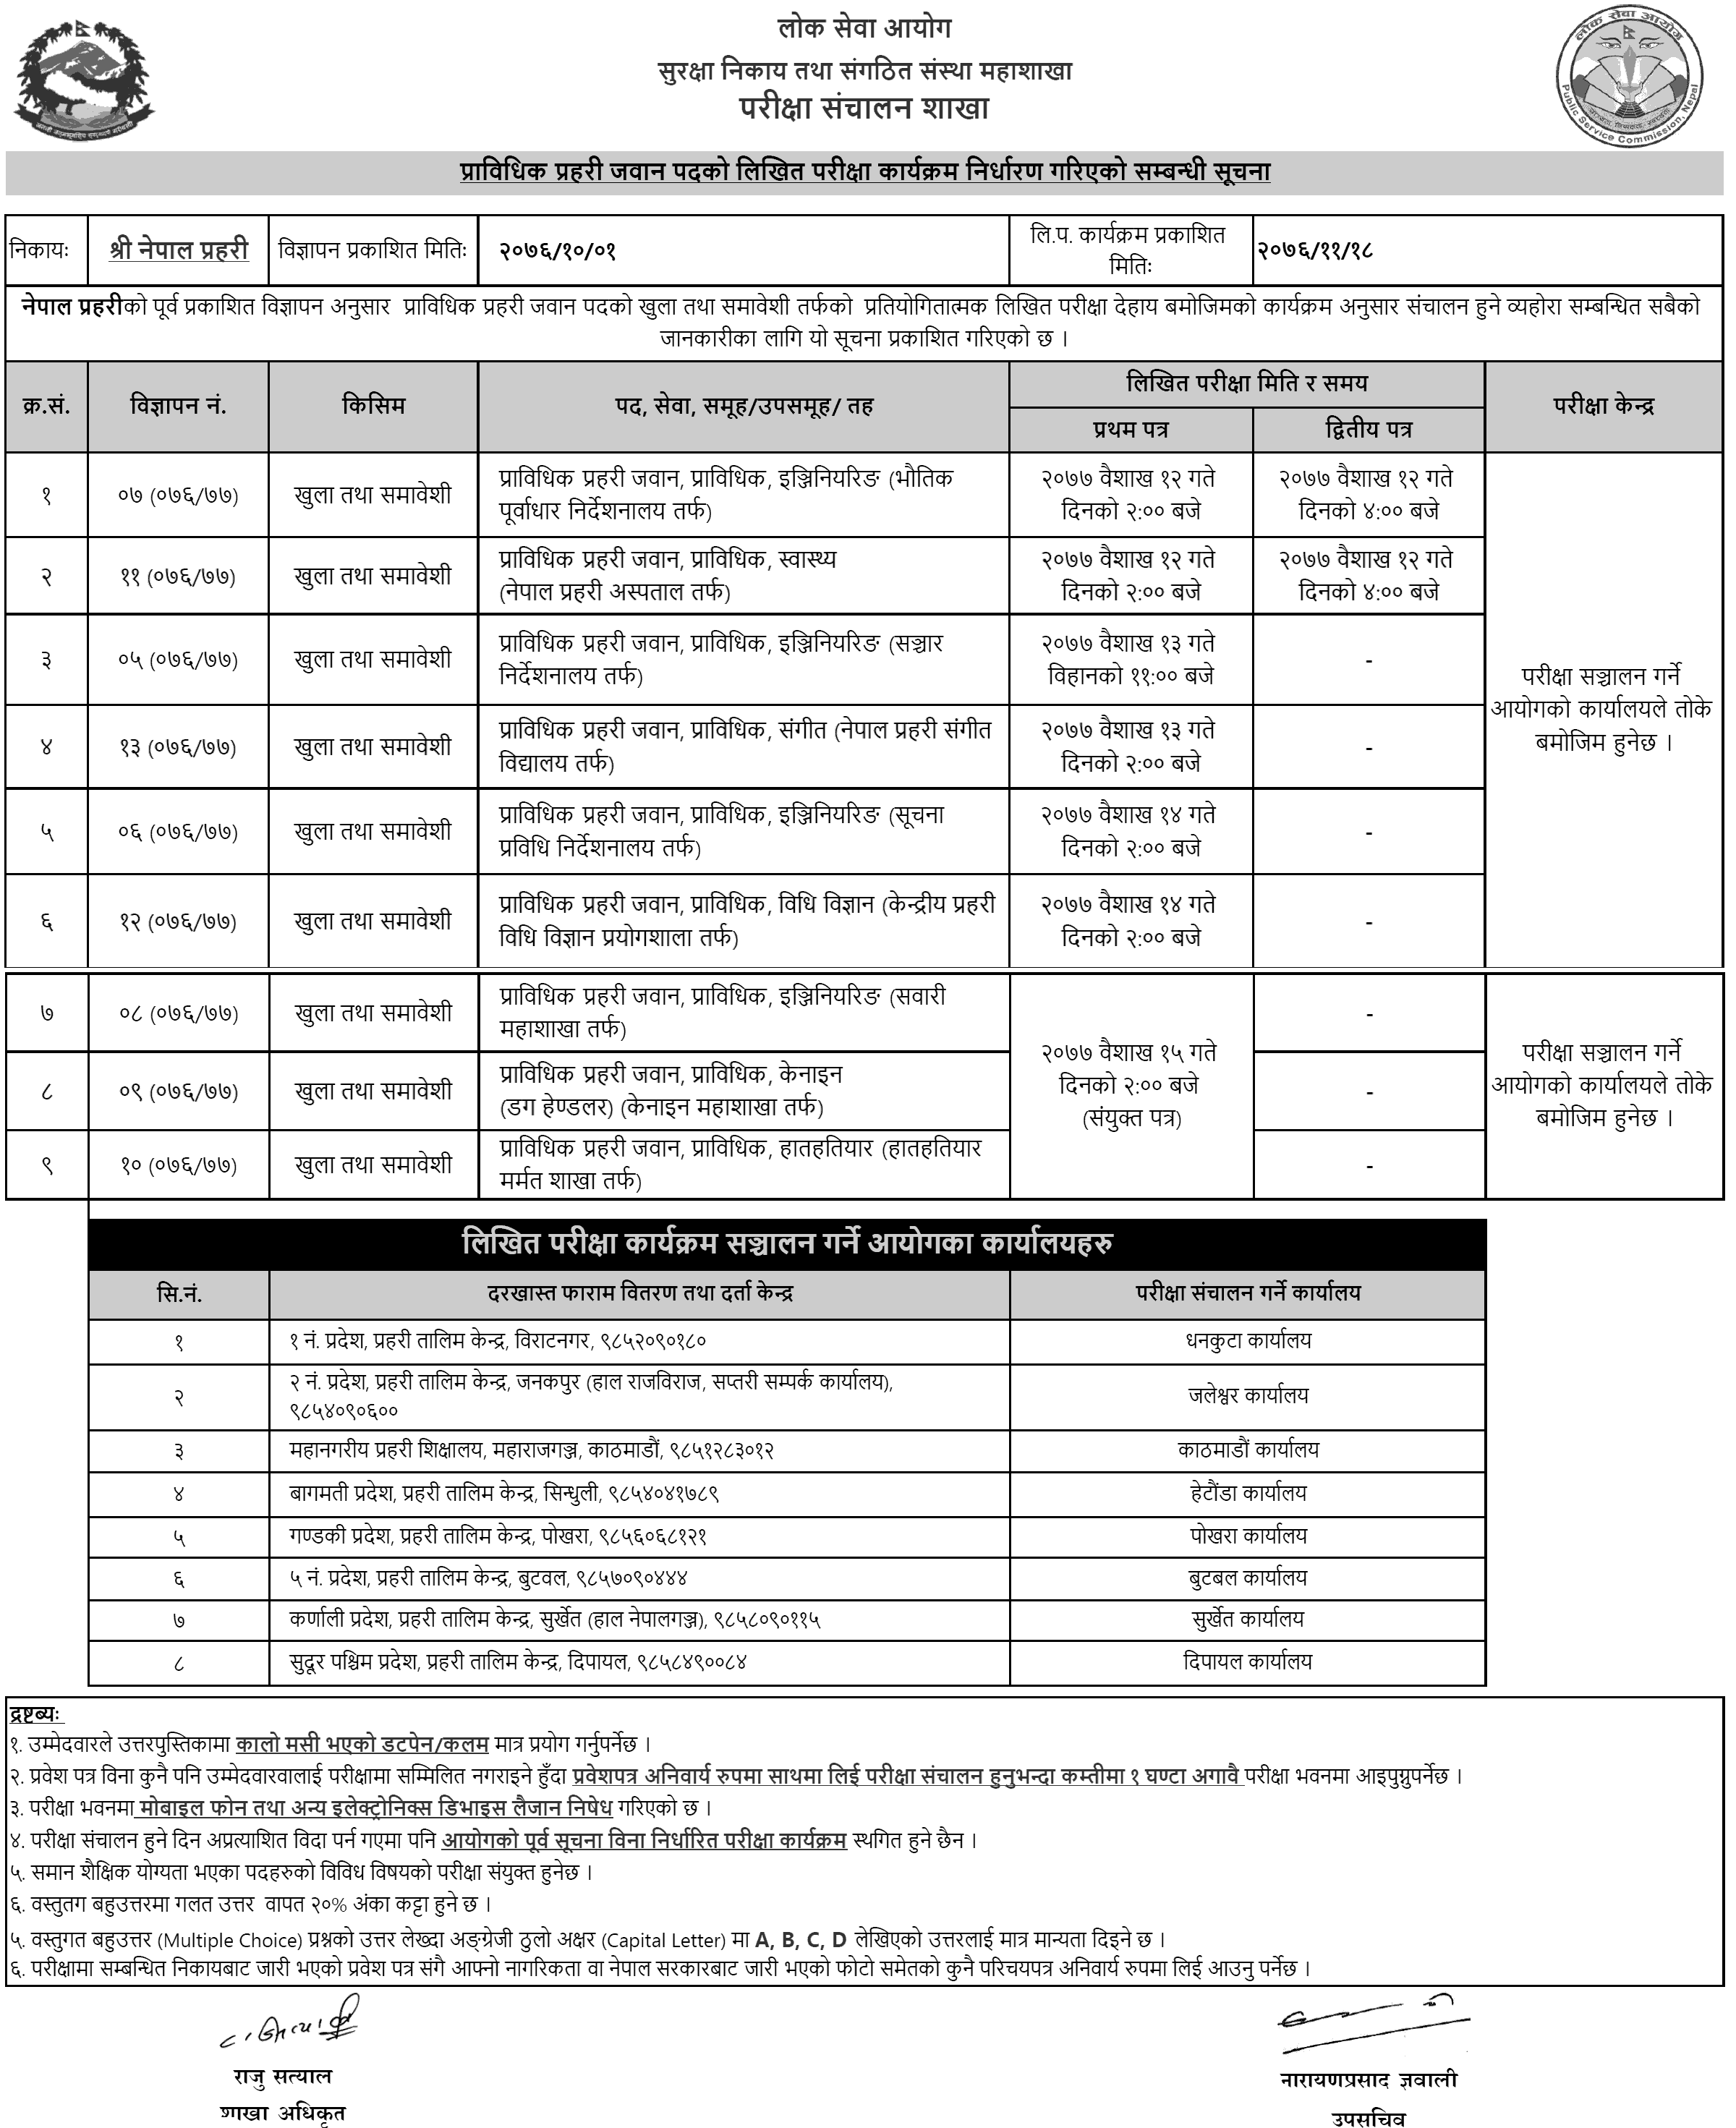 Nepal Police Jawan Post Exam Schedule